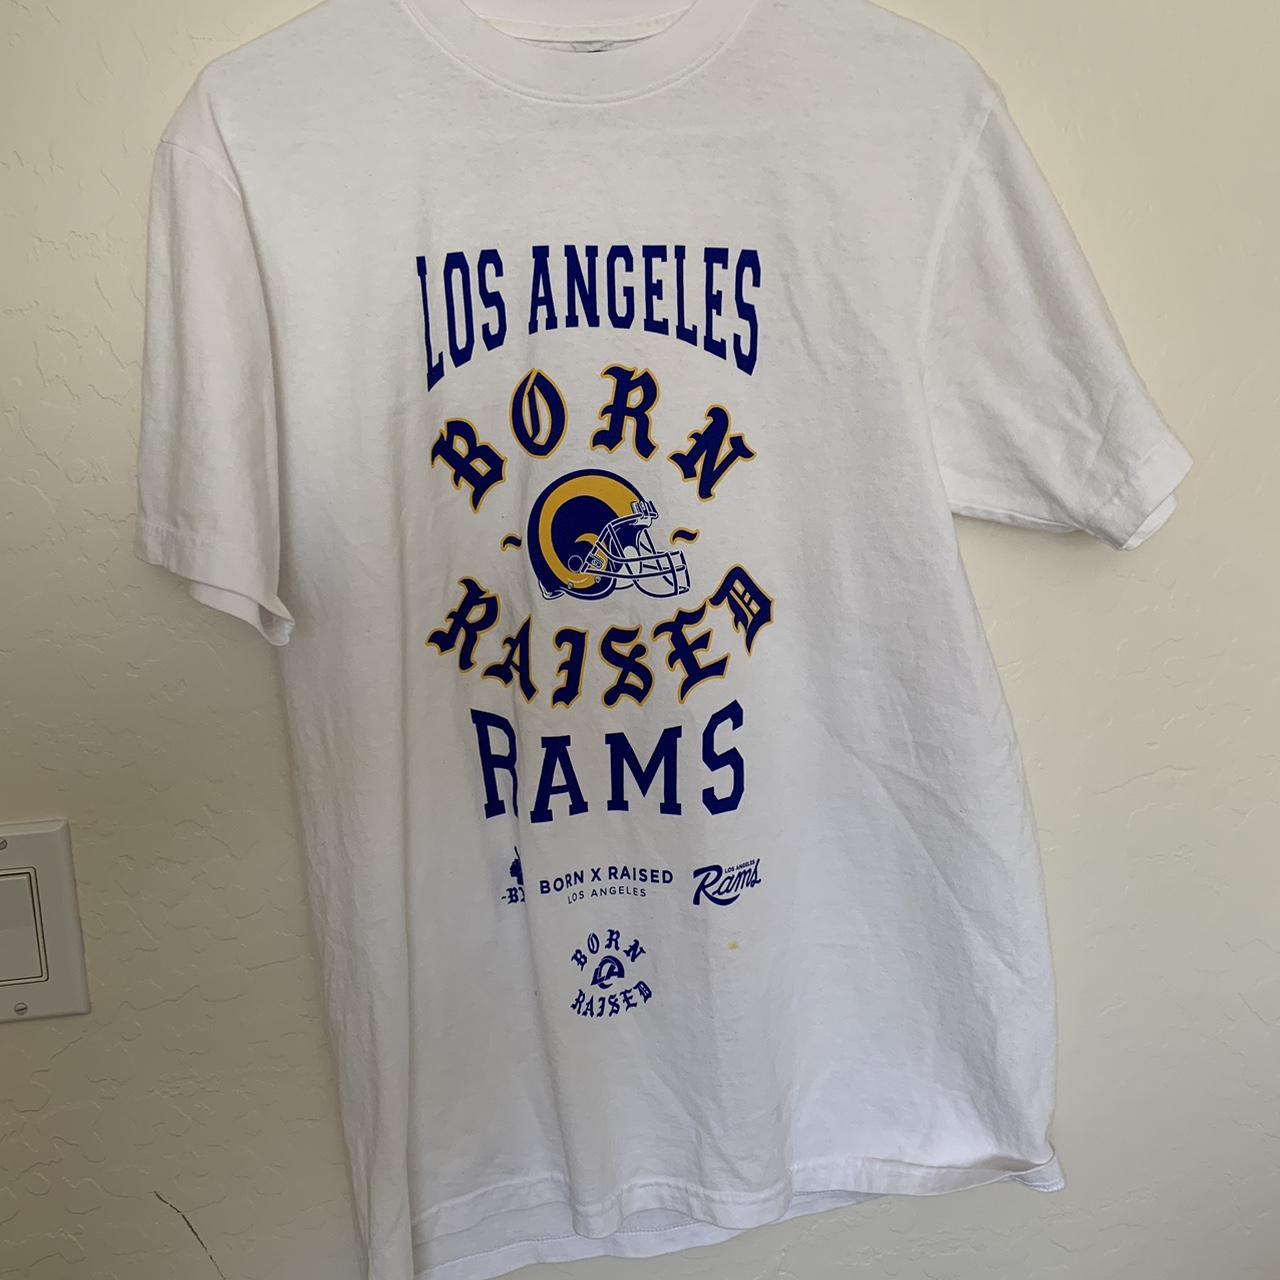 Born X Raised/LA Kings Medium shirt. Never